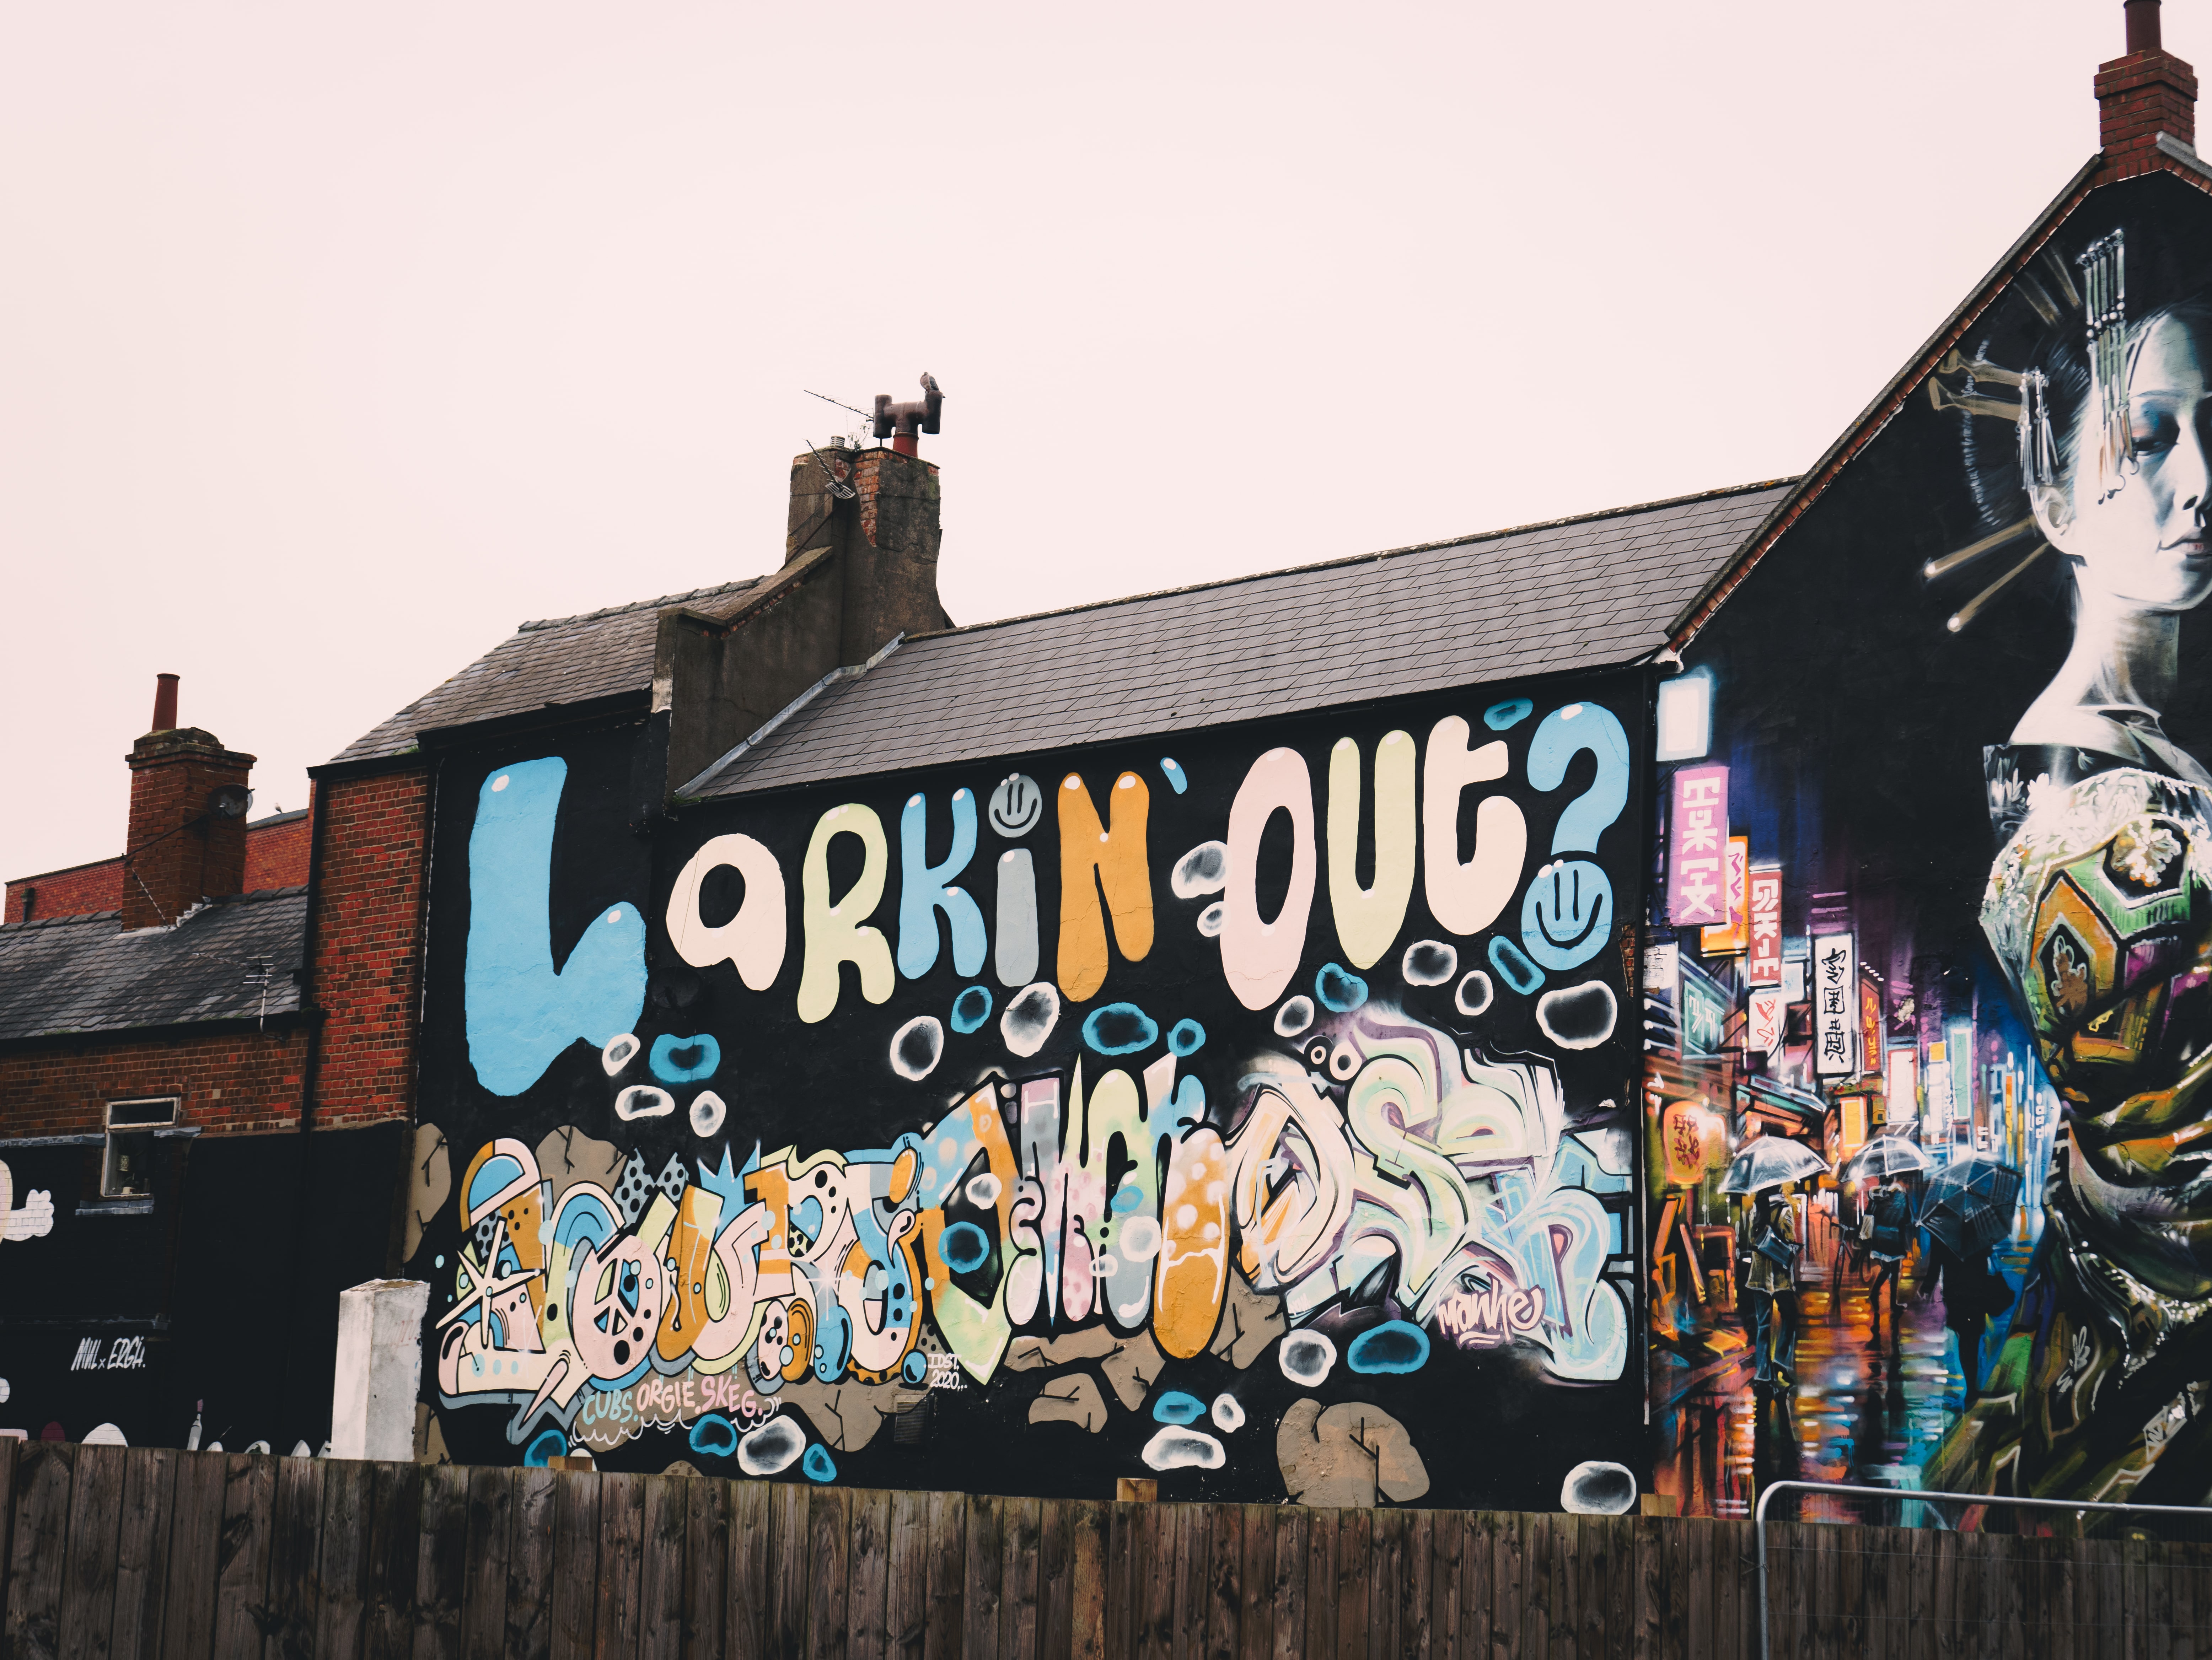 Graffiti on a wall that reads 'Larkin' out?'.